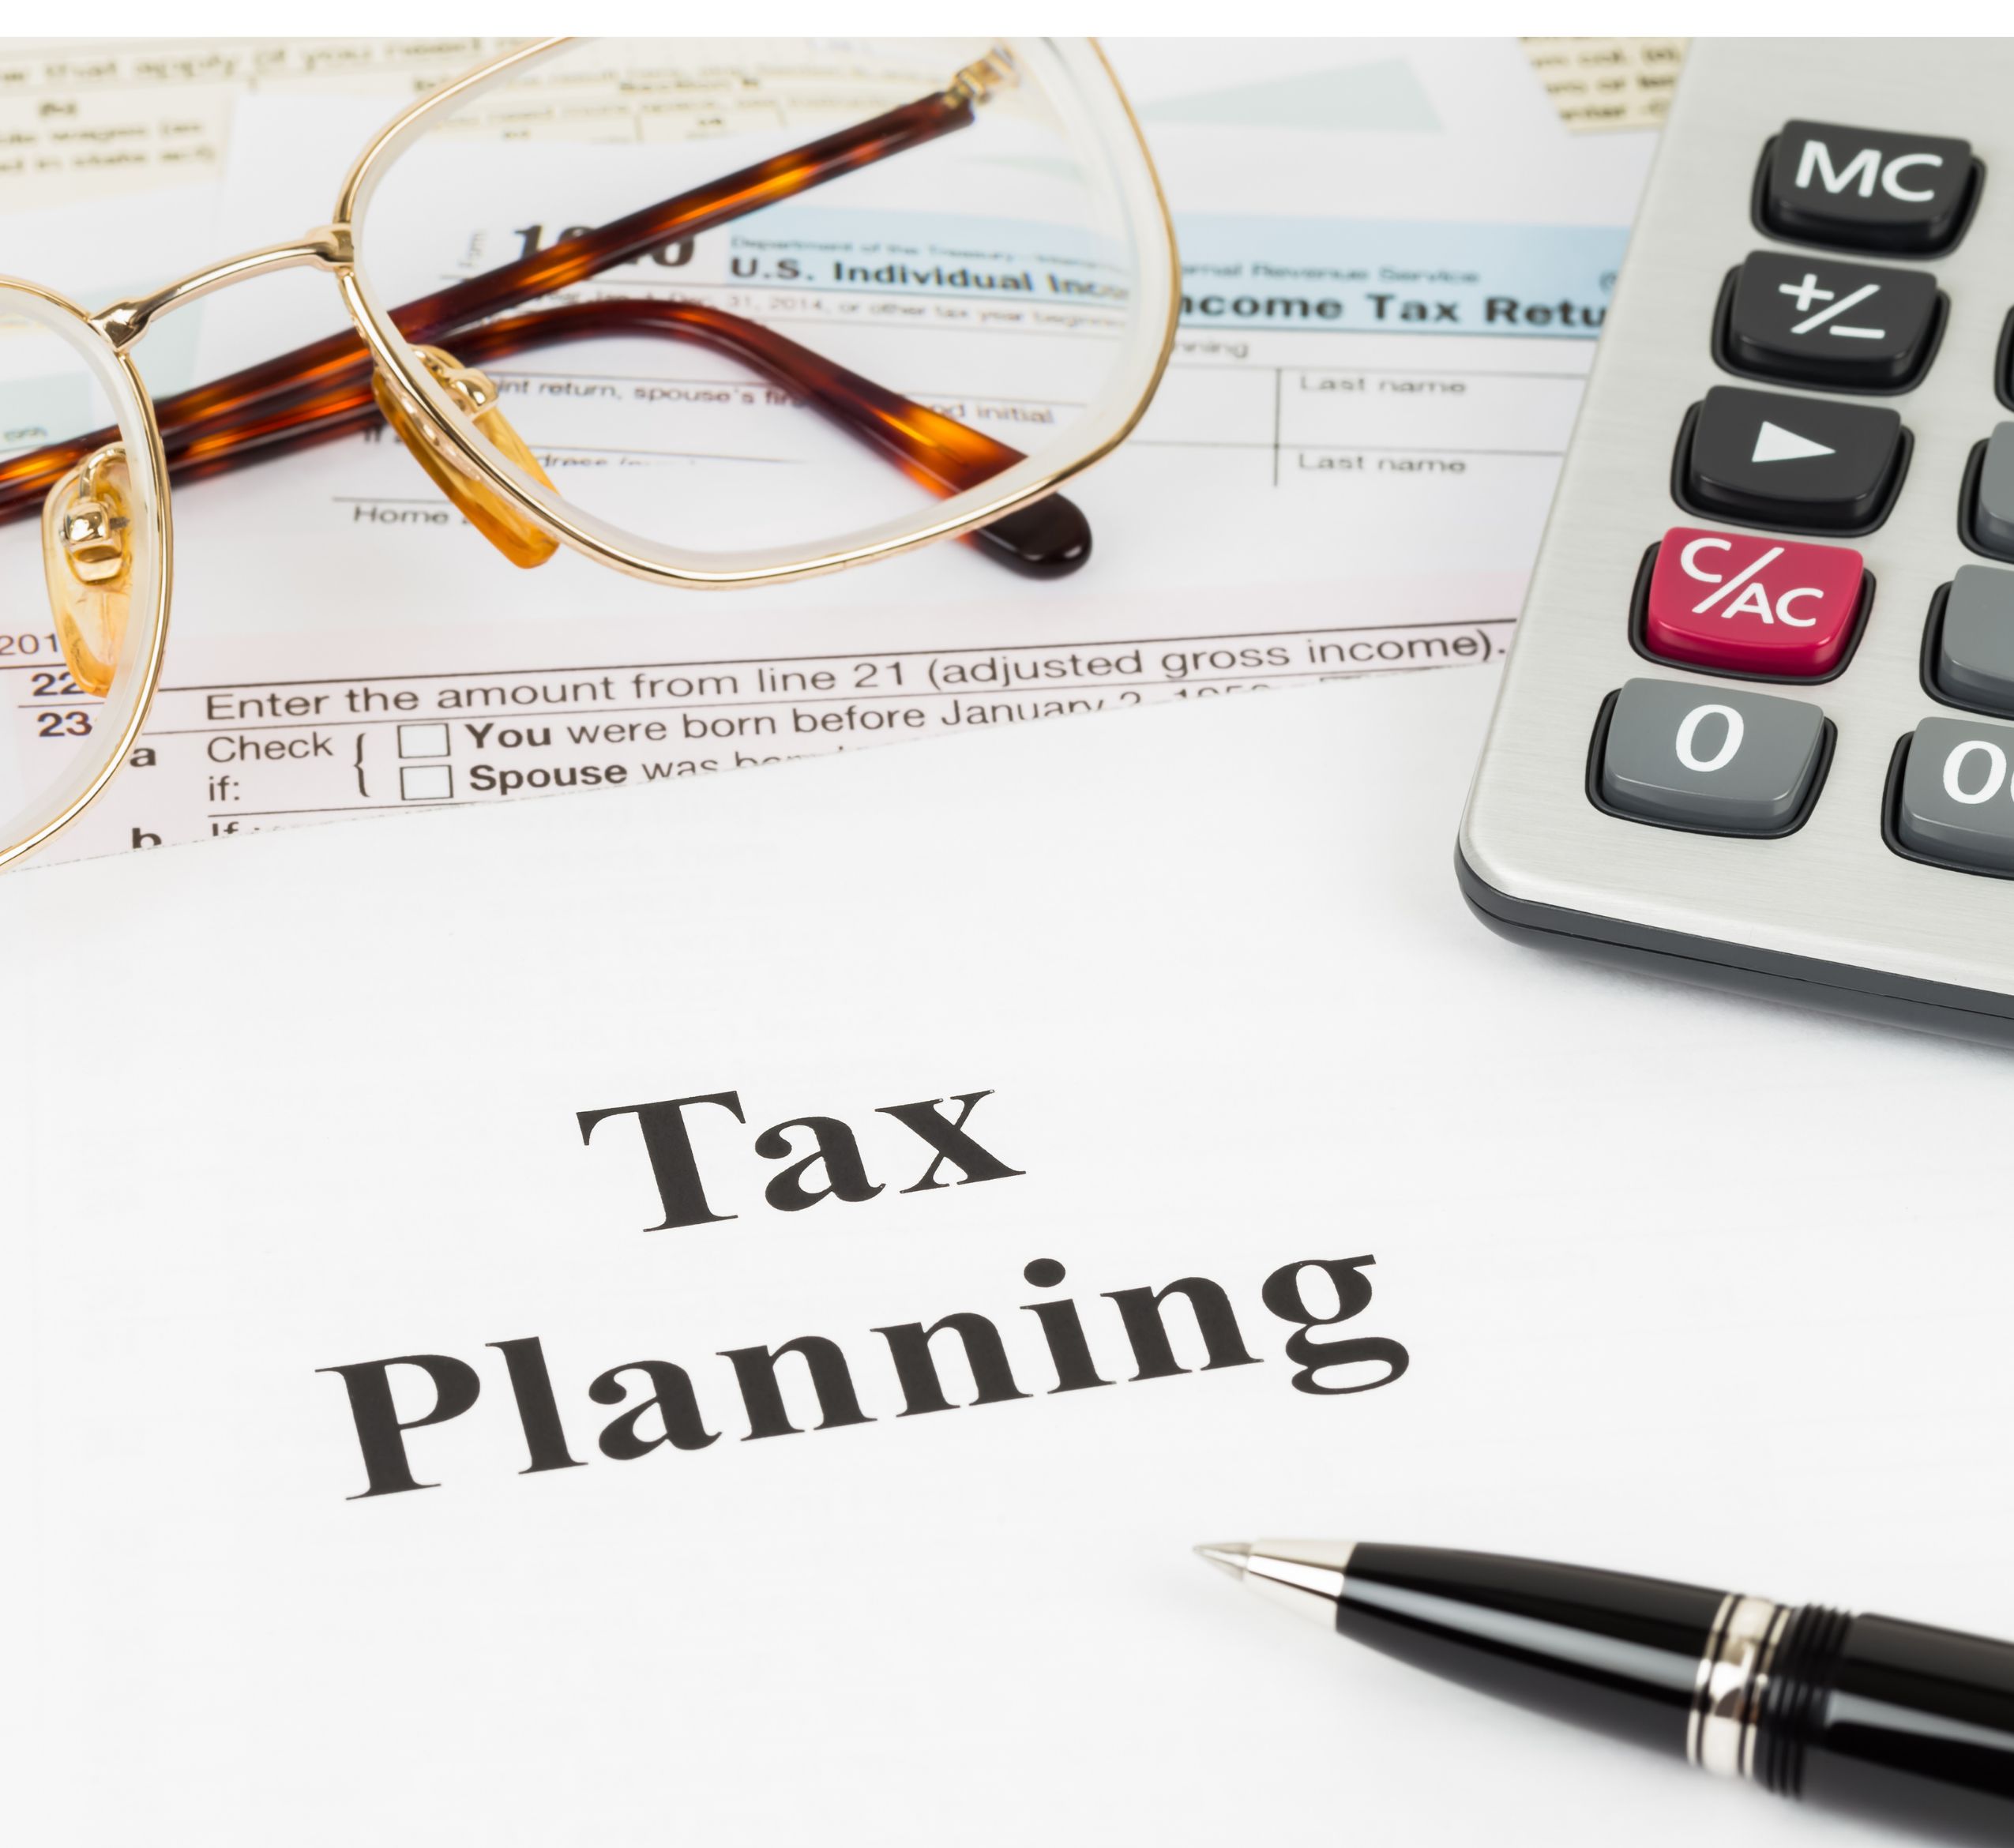 Tax planning & Advisory